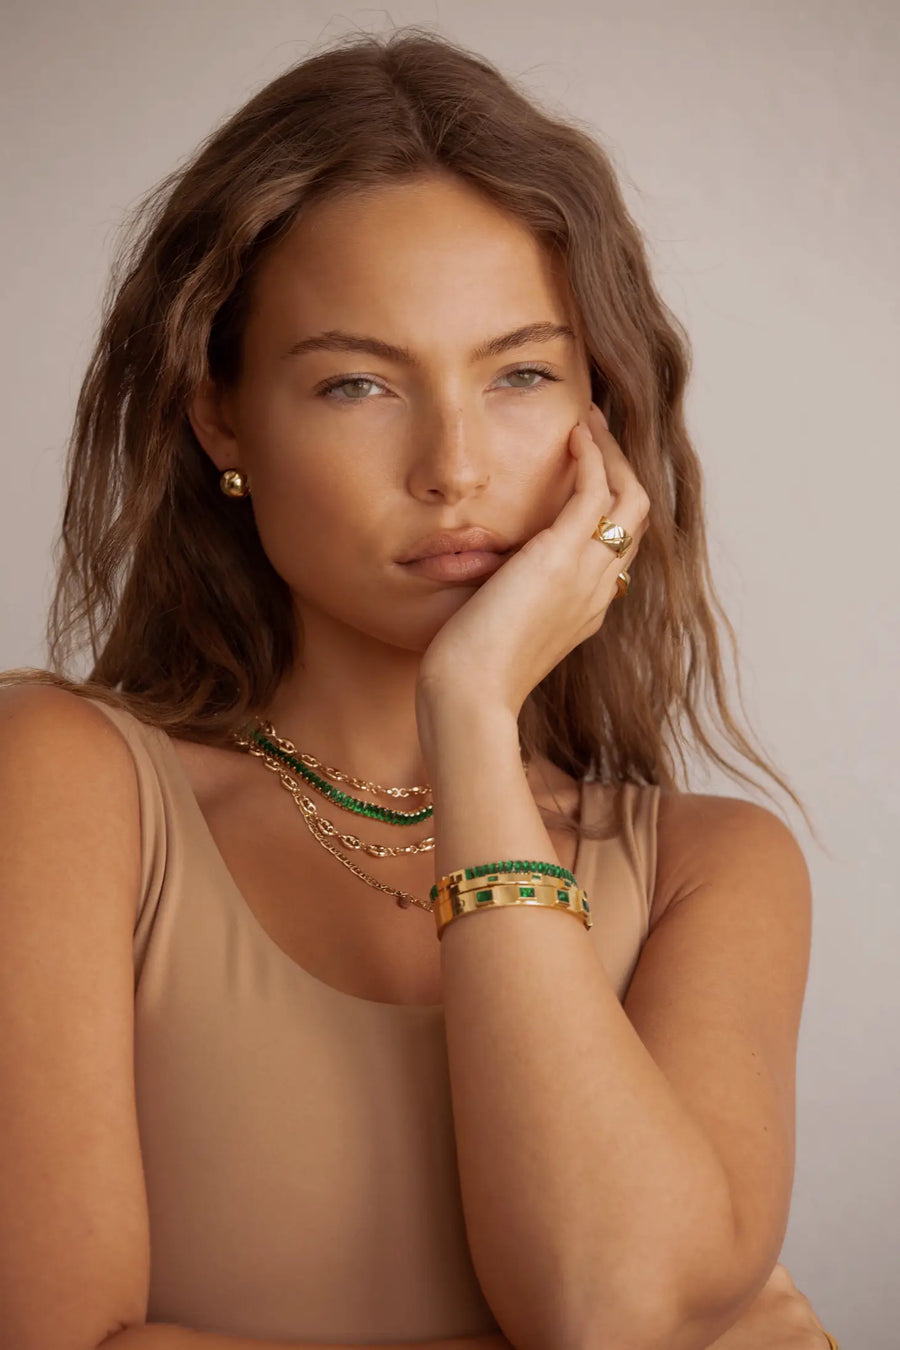 Sahira Shayna Baguette Necklace | Emerald